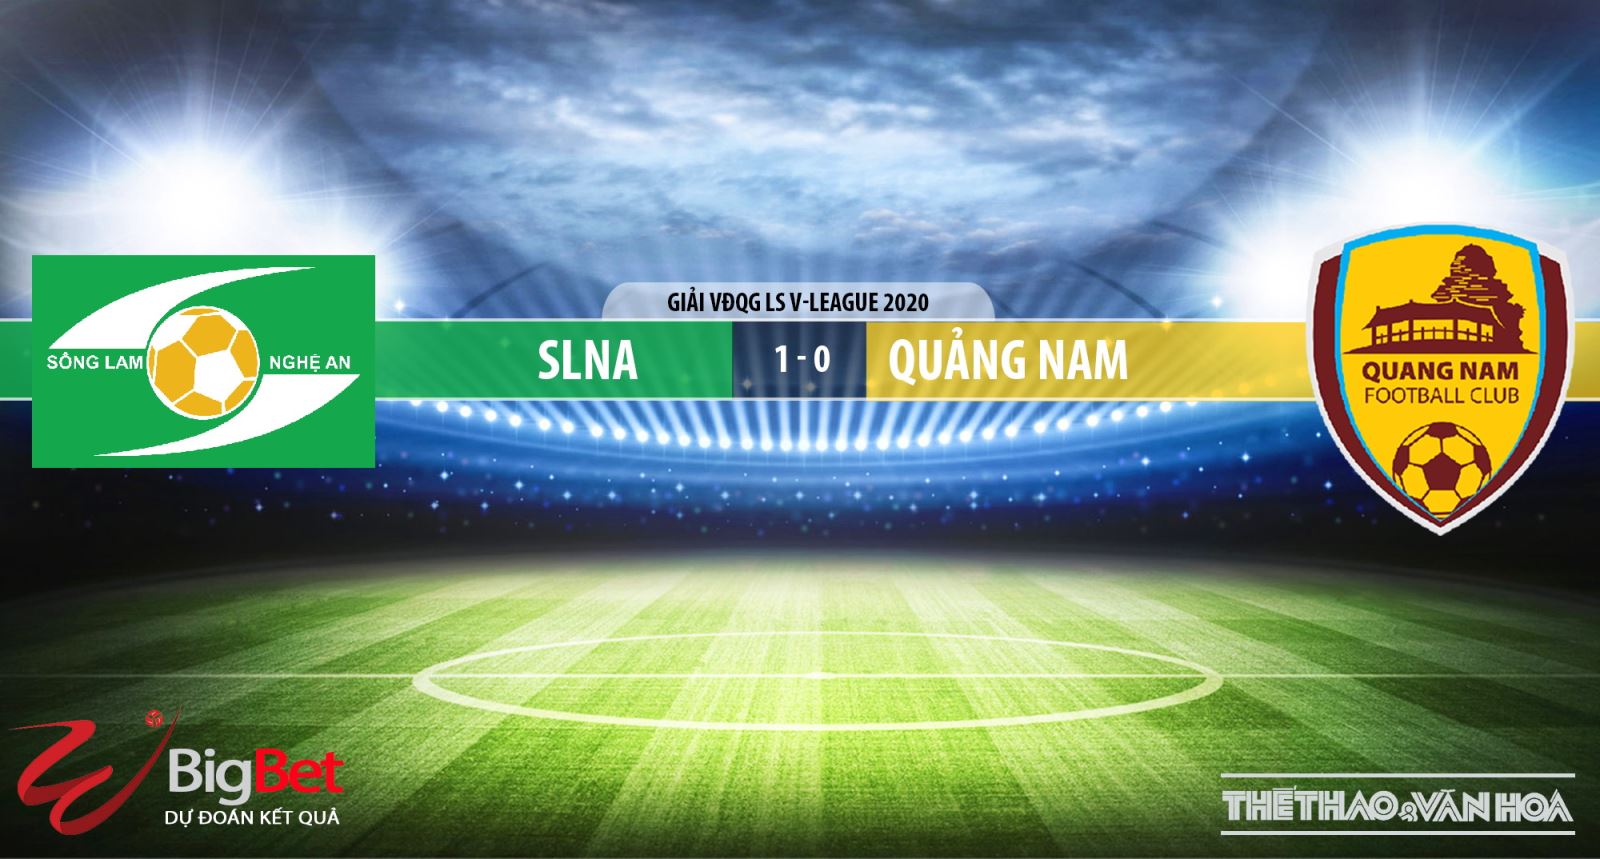 SLNA vs Quảng Nam, SLNA, Quảng Nam, bóng đá, nhận định bóng đá bóng đá, nhận định bóng đá SLNA vs Quảng Nam, trực tiếp SLNA vs Quảng Nam, nhận định SLNA vs Quảng Nam